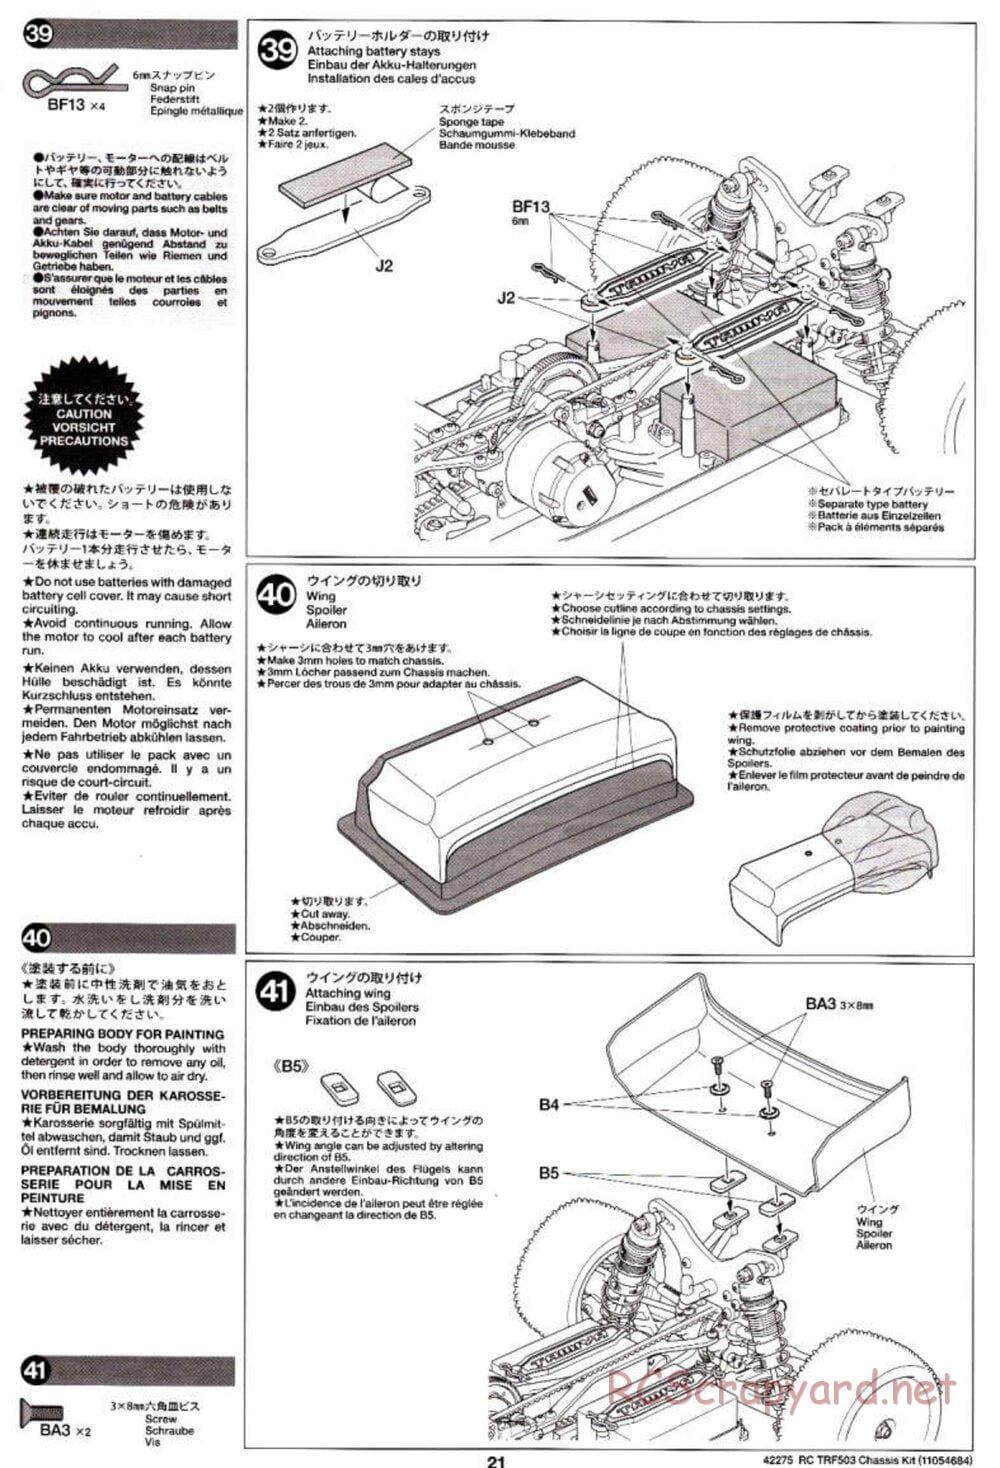 Tamiya - TRF503 Chassis - Manual - Page 21